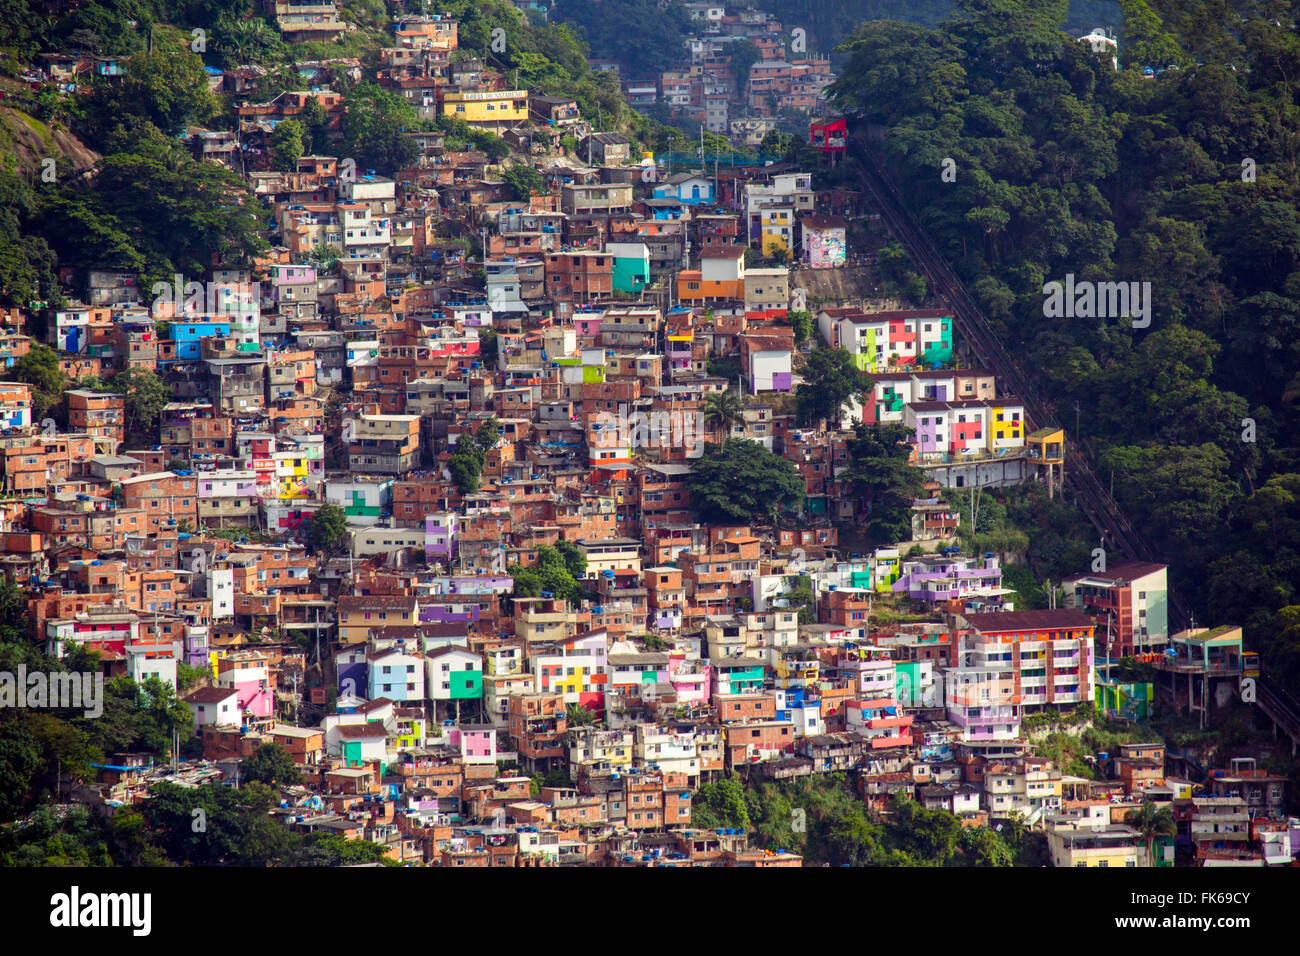 View of the Santa Marta favela (slum community) showing the funicular railway, Rio de Janeiro, Brazil, South America Stock Photo